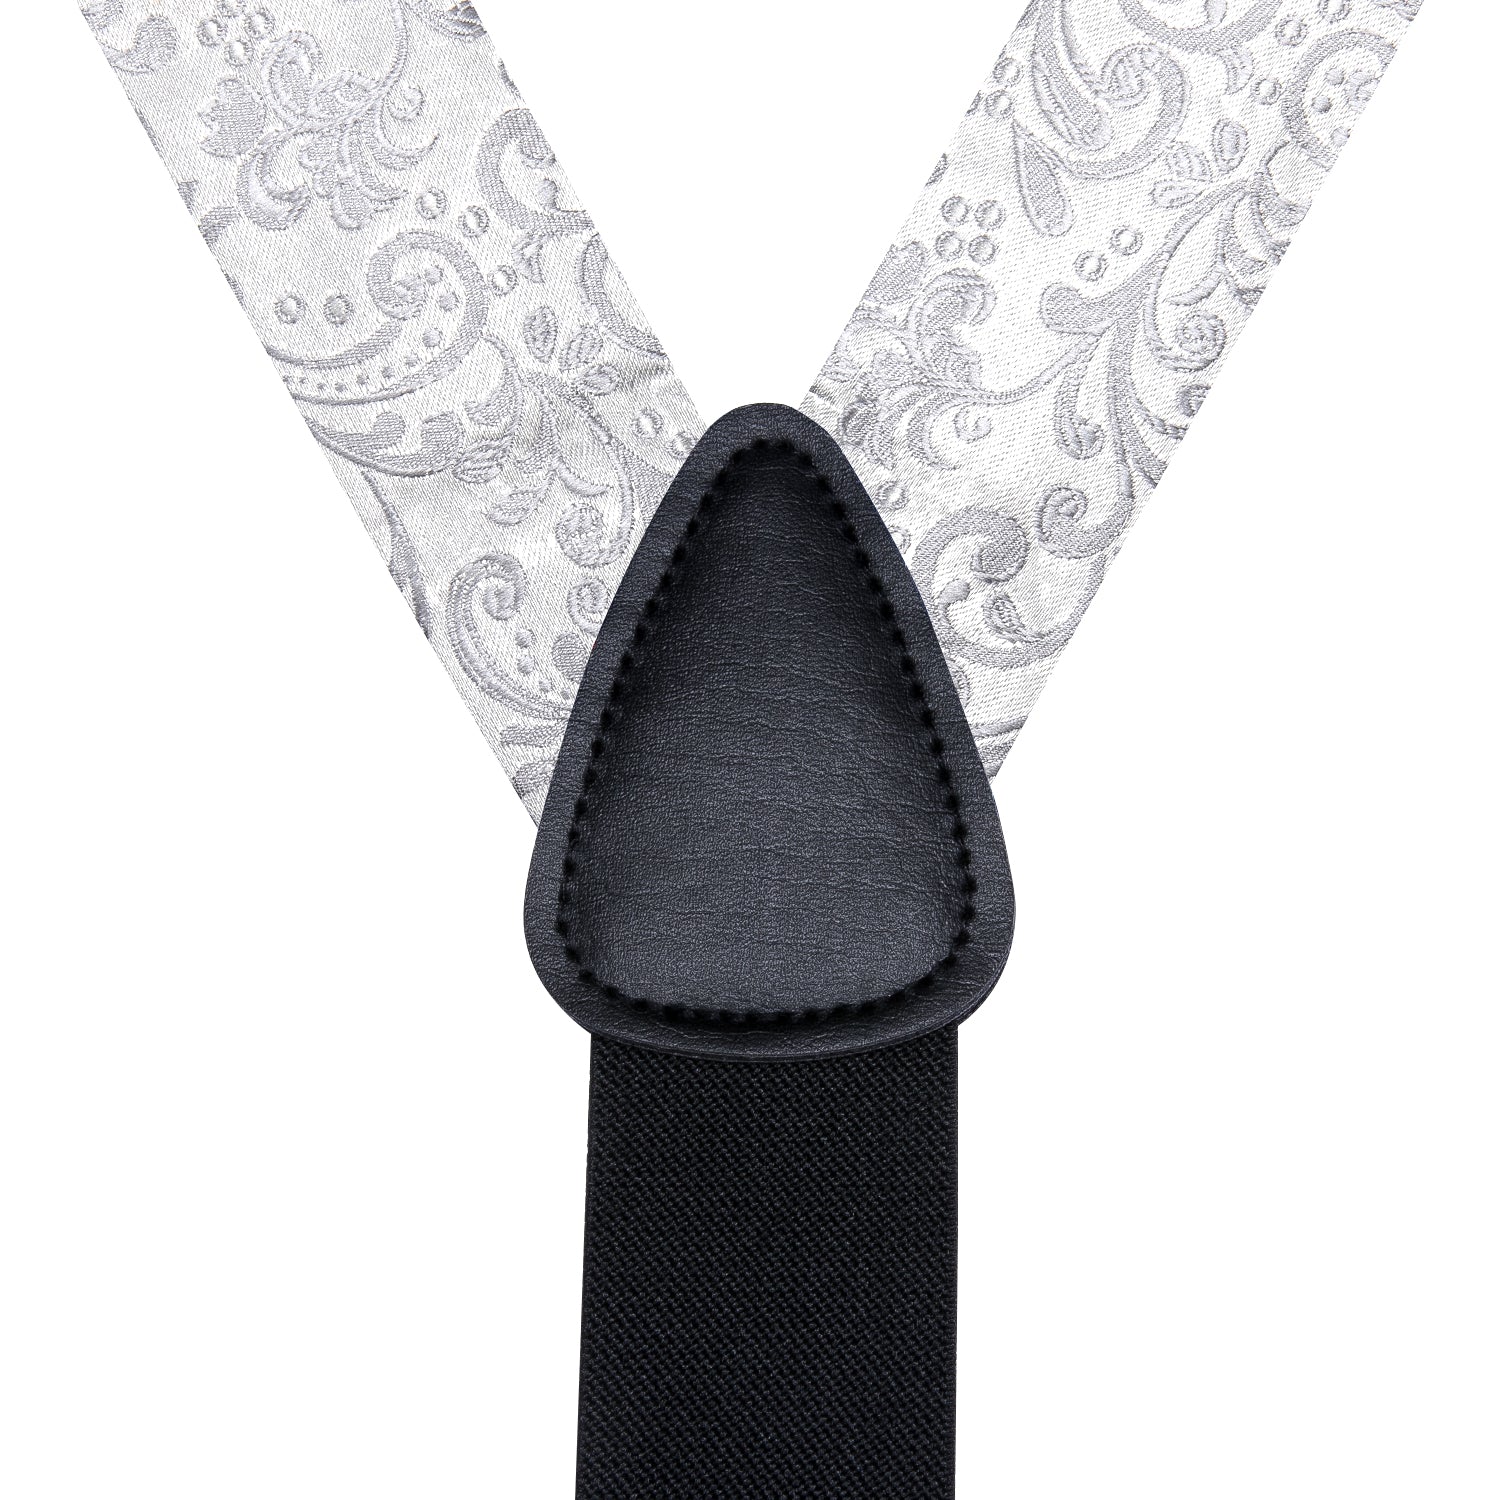 Silver Paisley and Floral Men's Suspender Bowtie Pocket Square Cufflinks Set